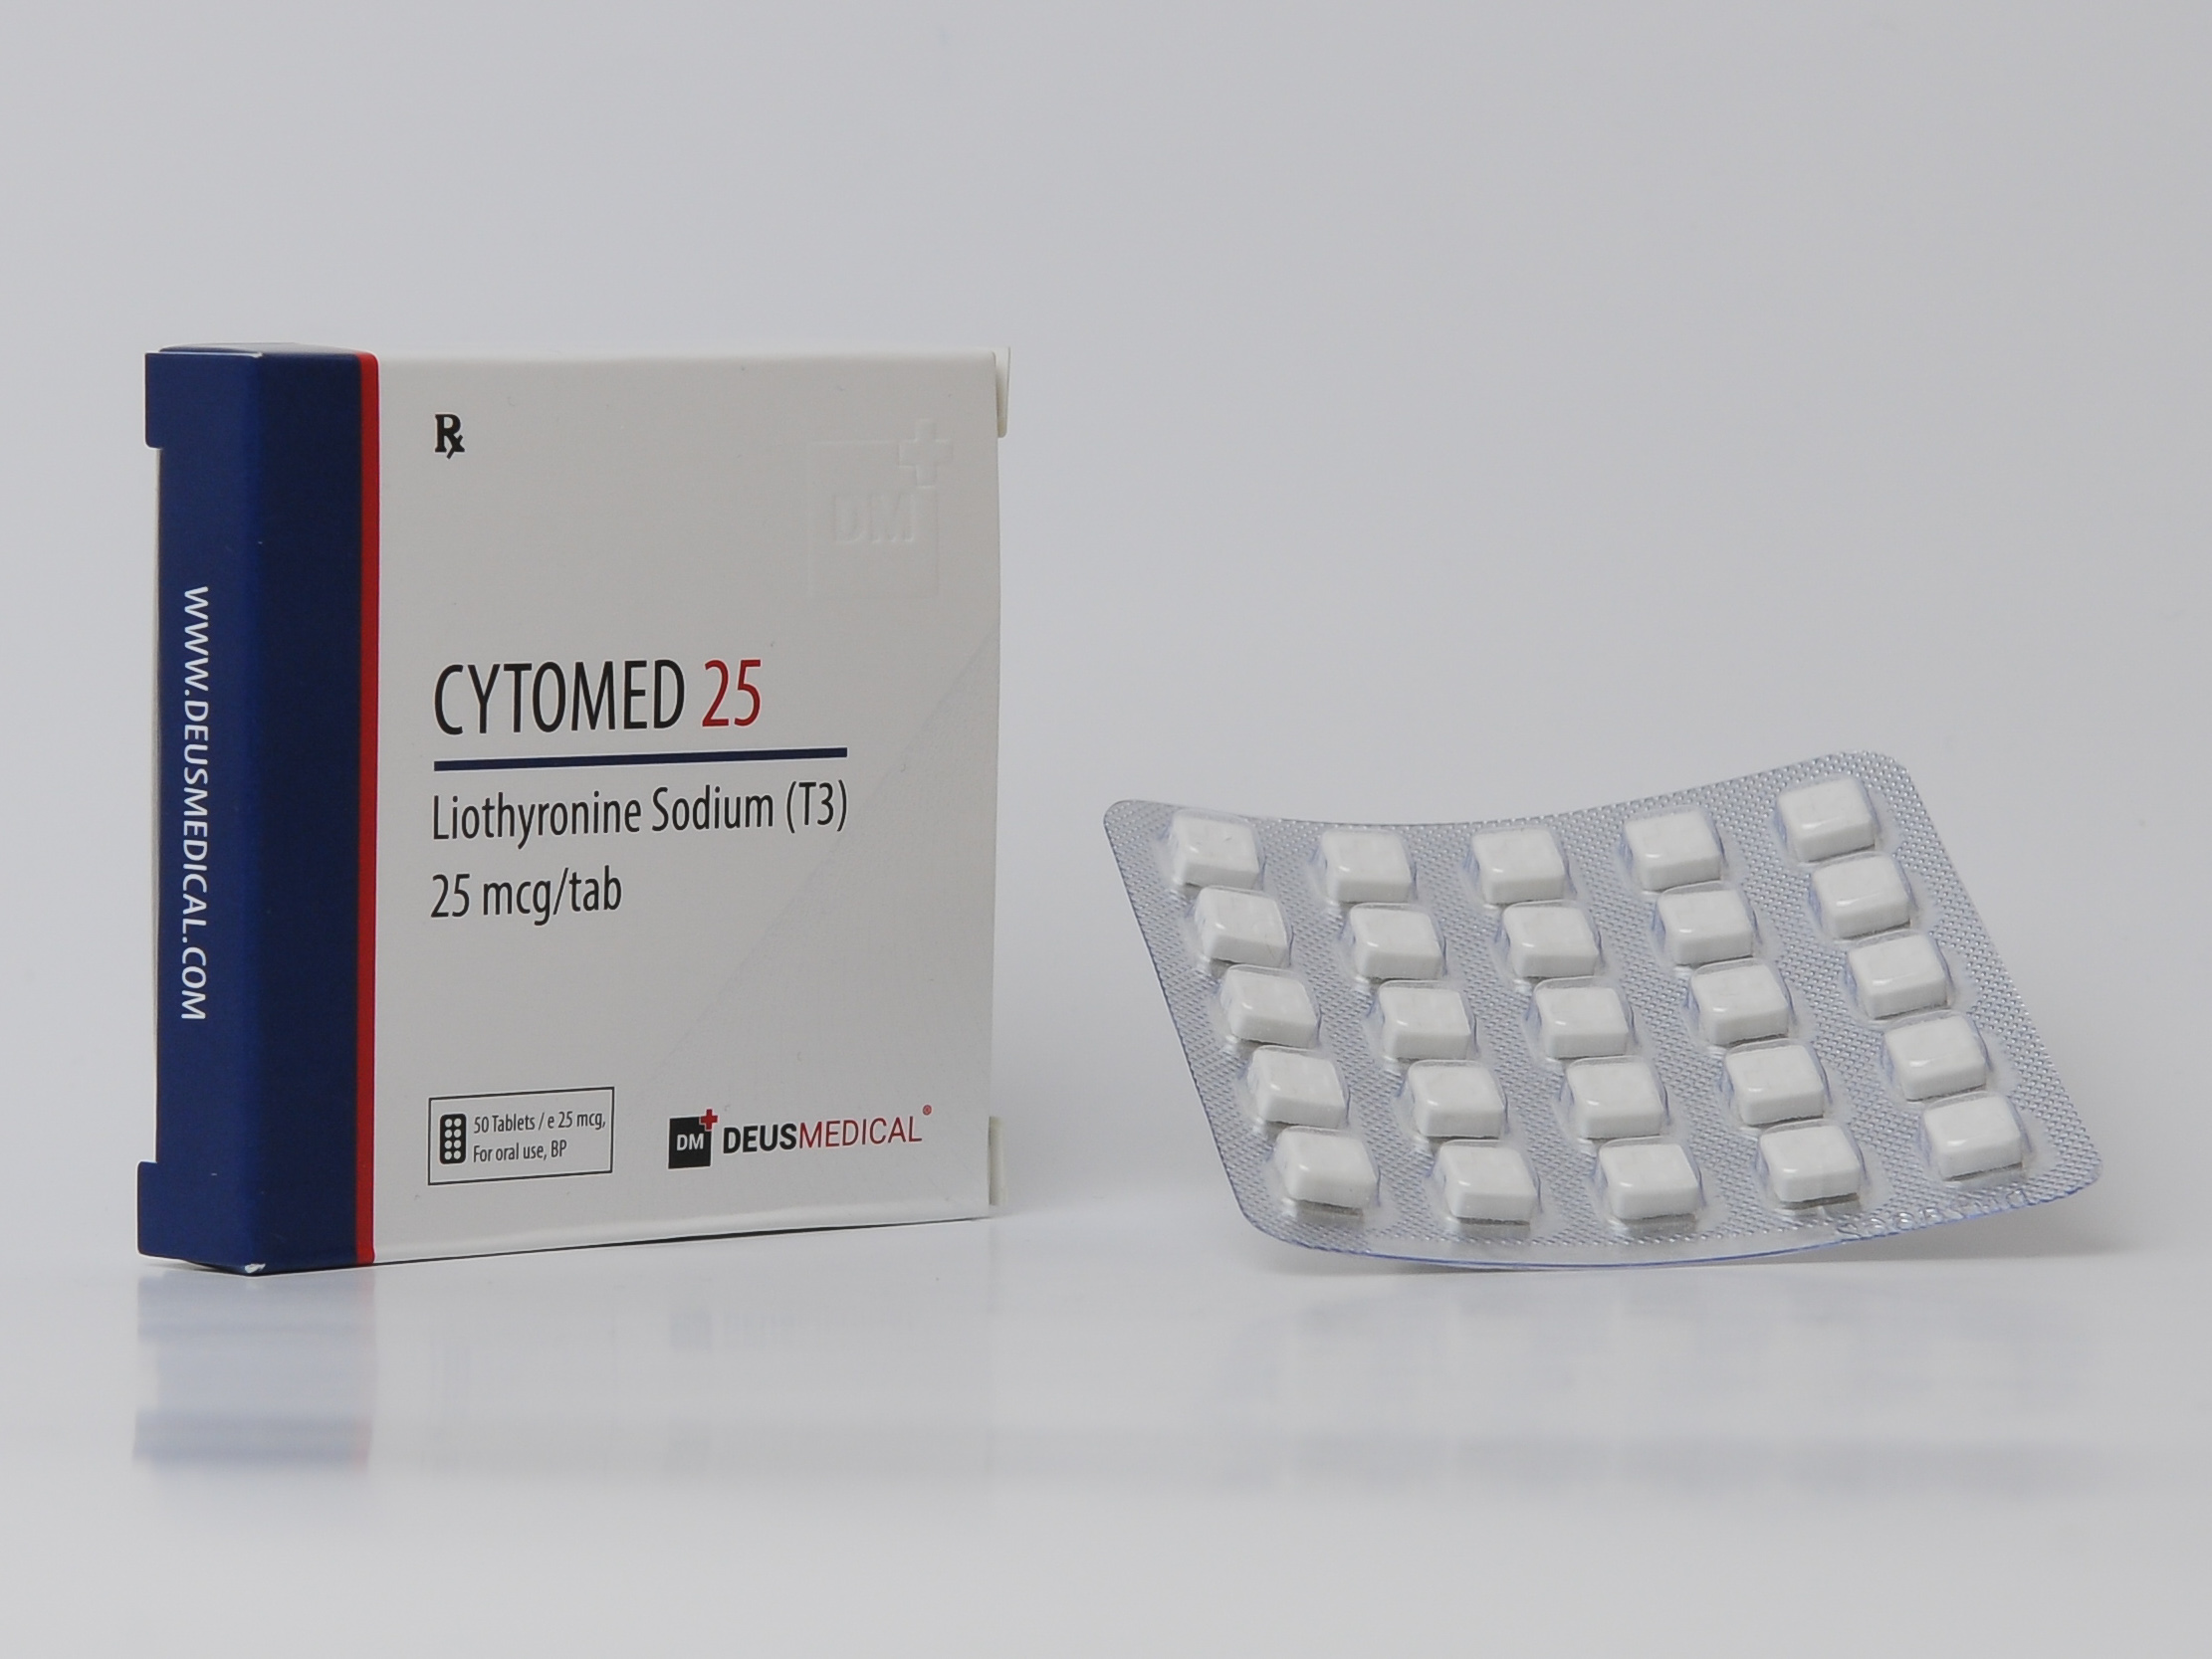 Cytomed